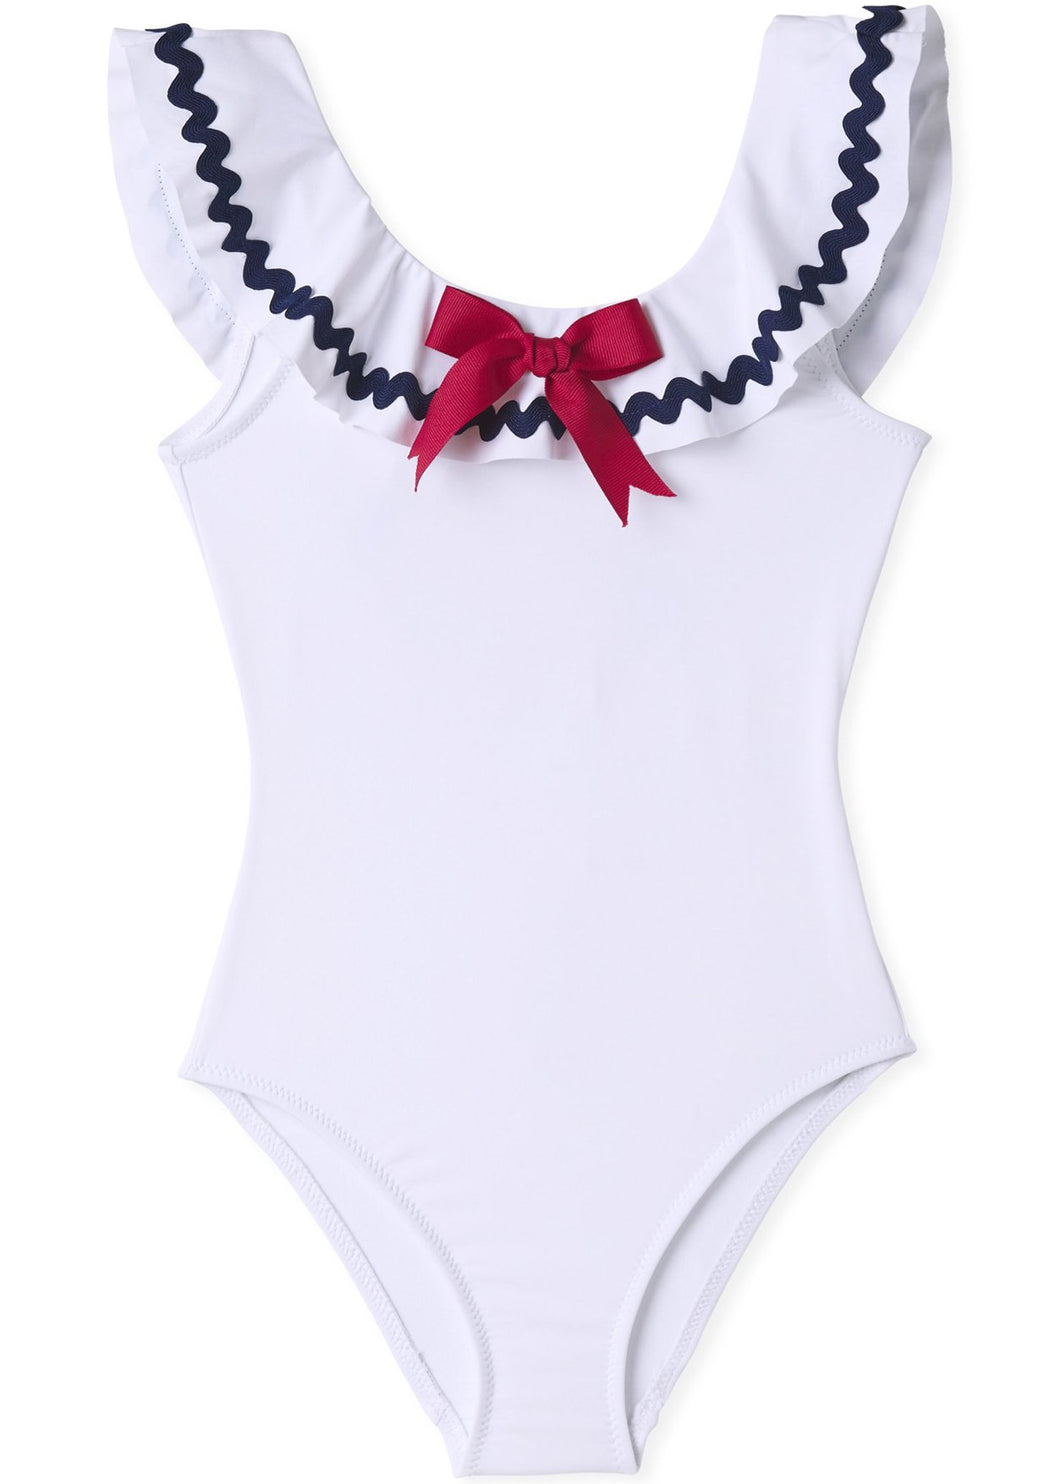 Sailor Inspired Swimsuit